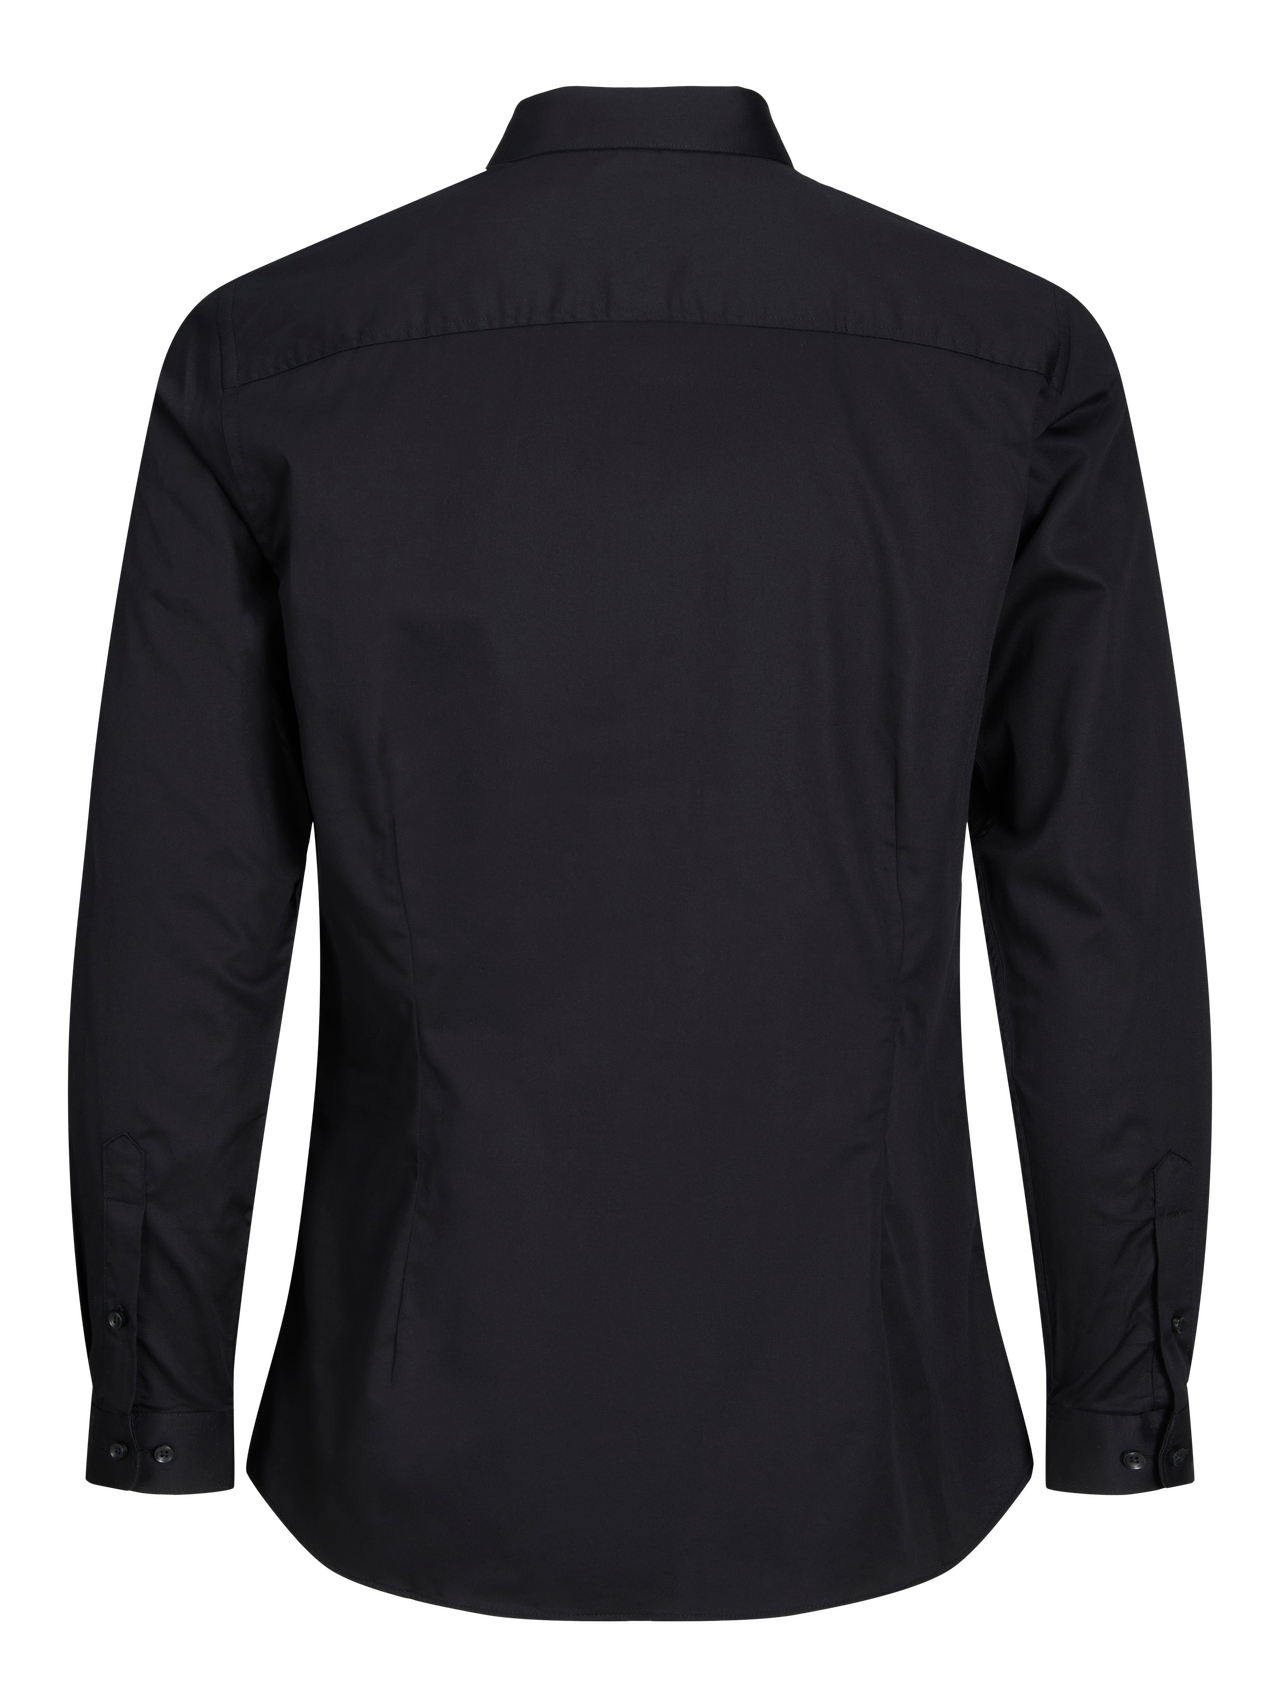 Jack & Jones Super Slim Fit Shirt -Black - 12097662